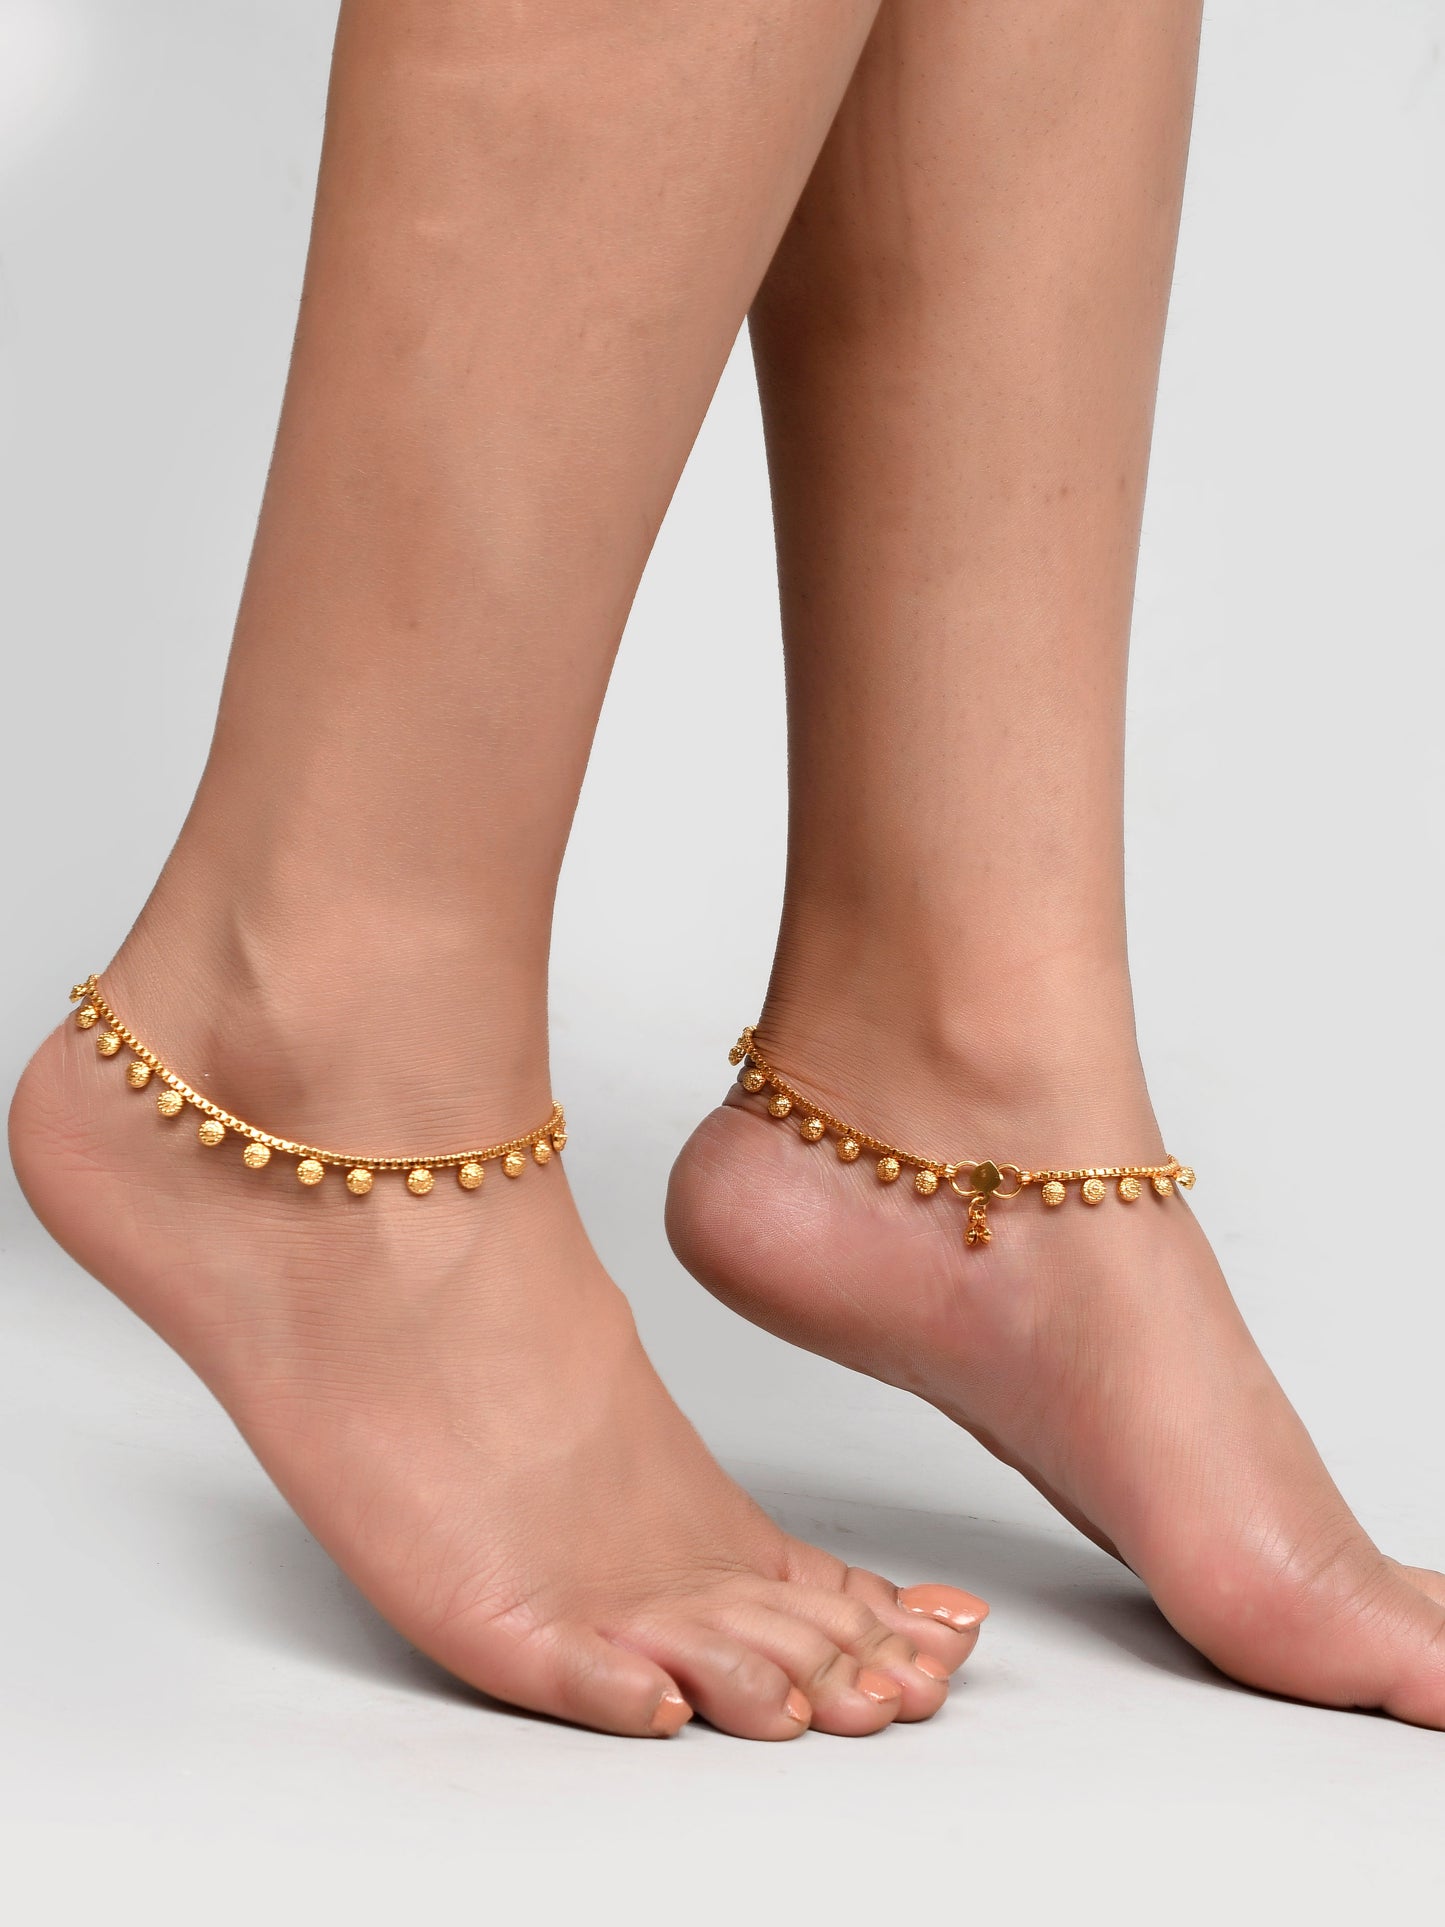 Golden Traditional Indian Anklet for women